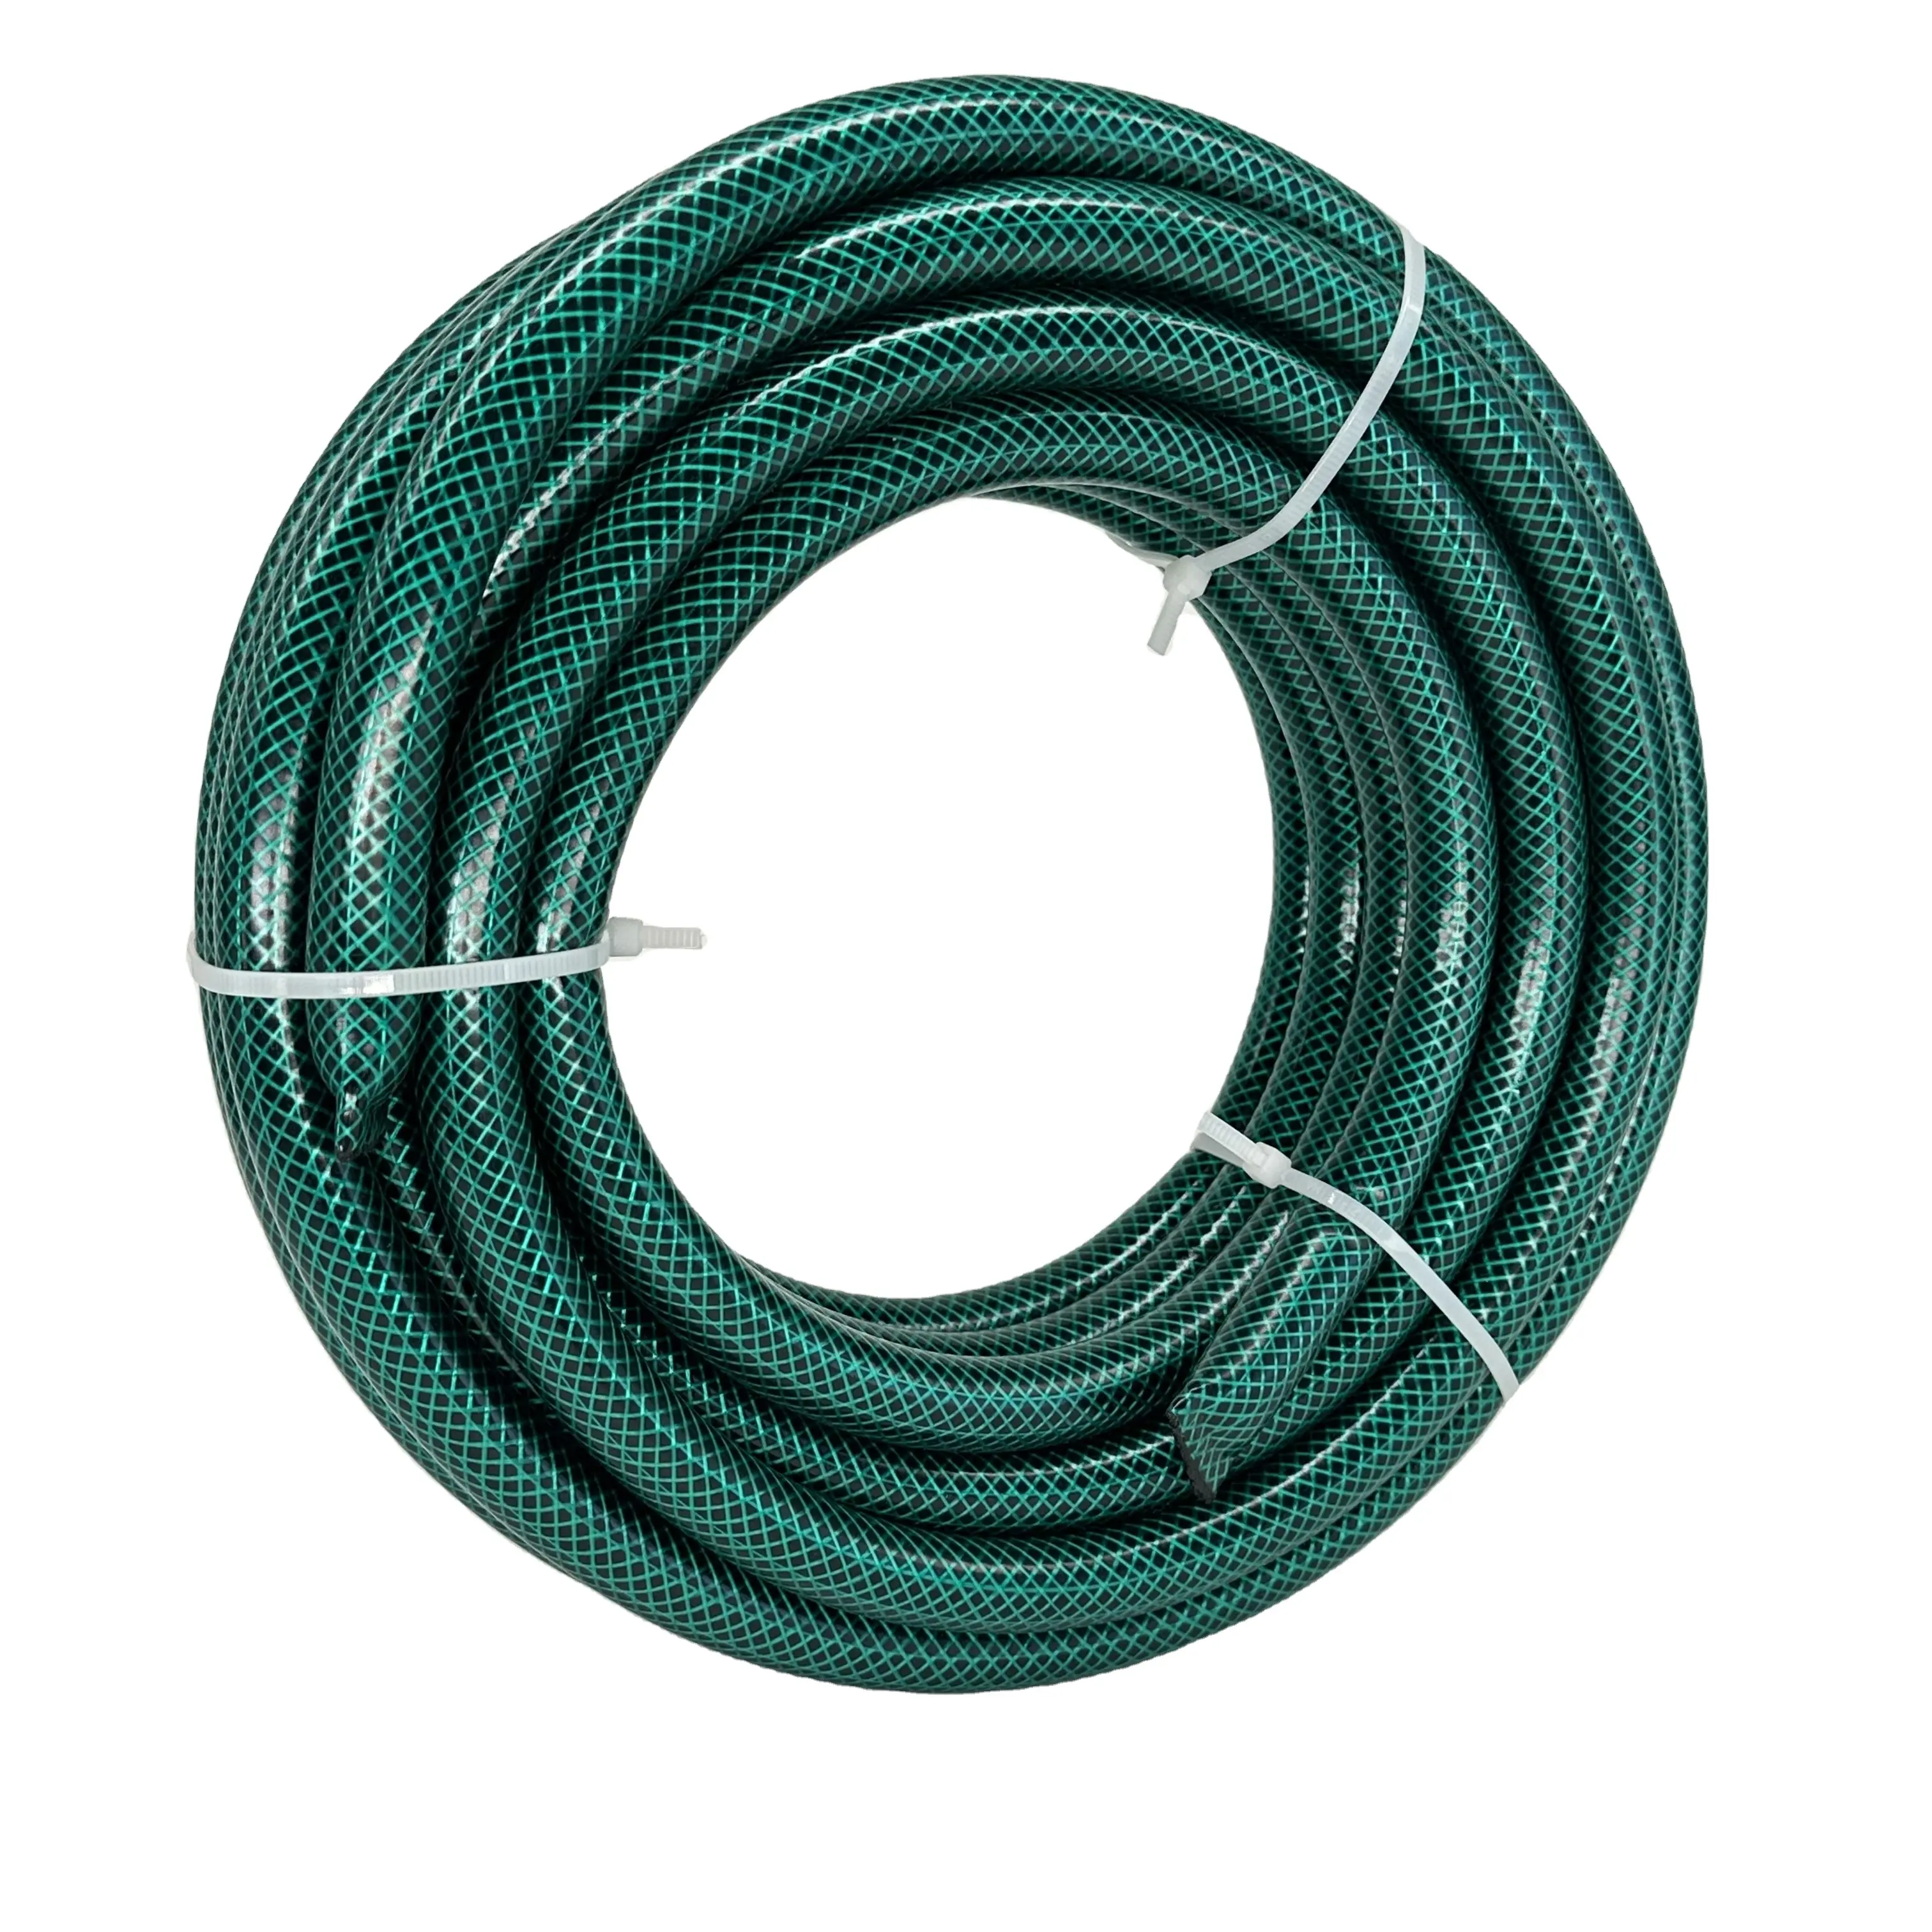 Professional garden supplies 1/2" pvc flexible hose irrigation garden hose set garden hose for wholesale